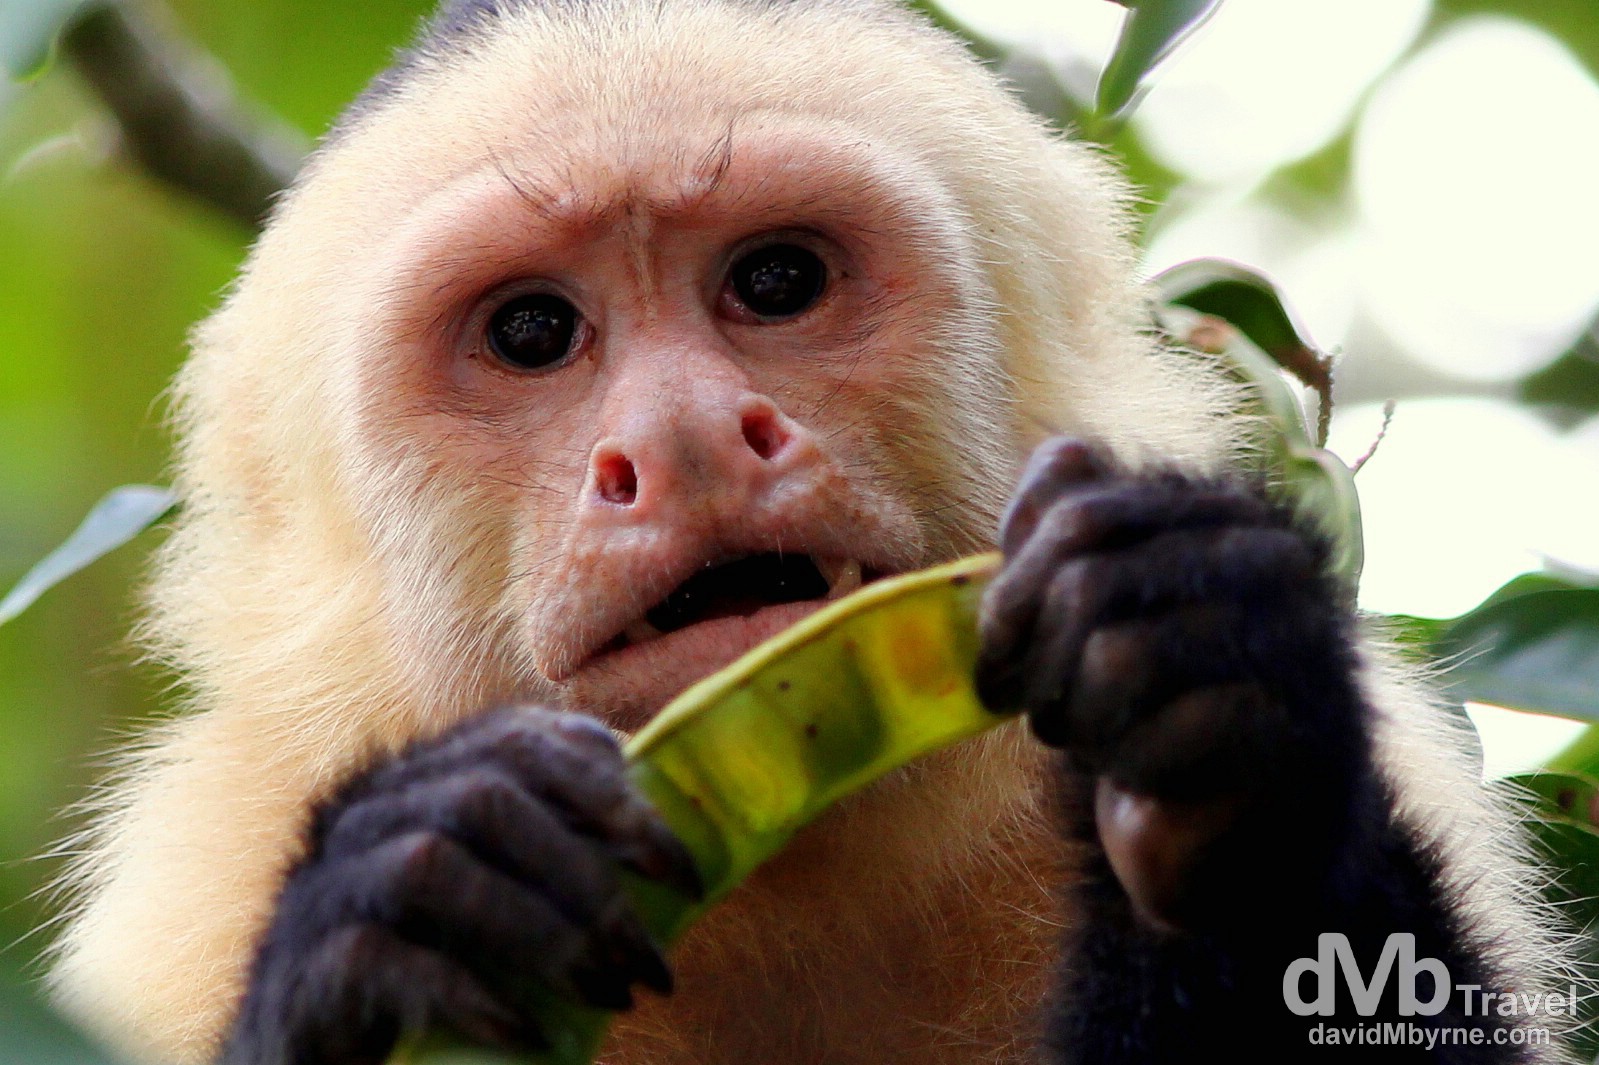 A monkey in the trees of Parque Nacional Manuel Antonio, Costa Rica. June 26th 2013.